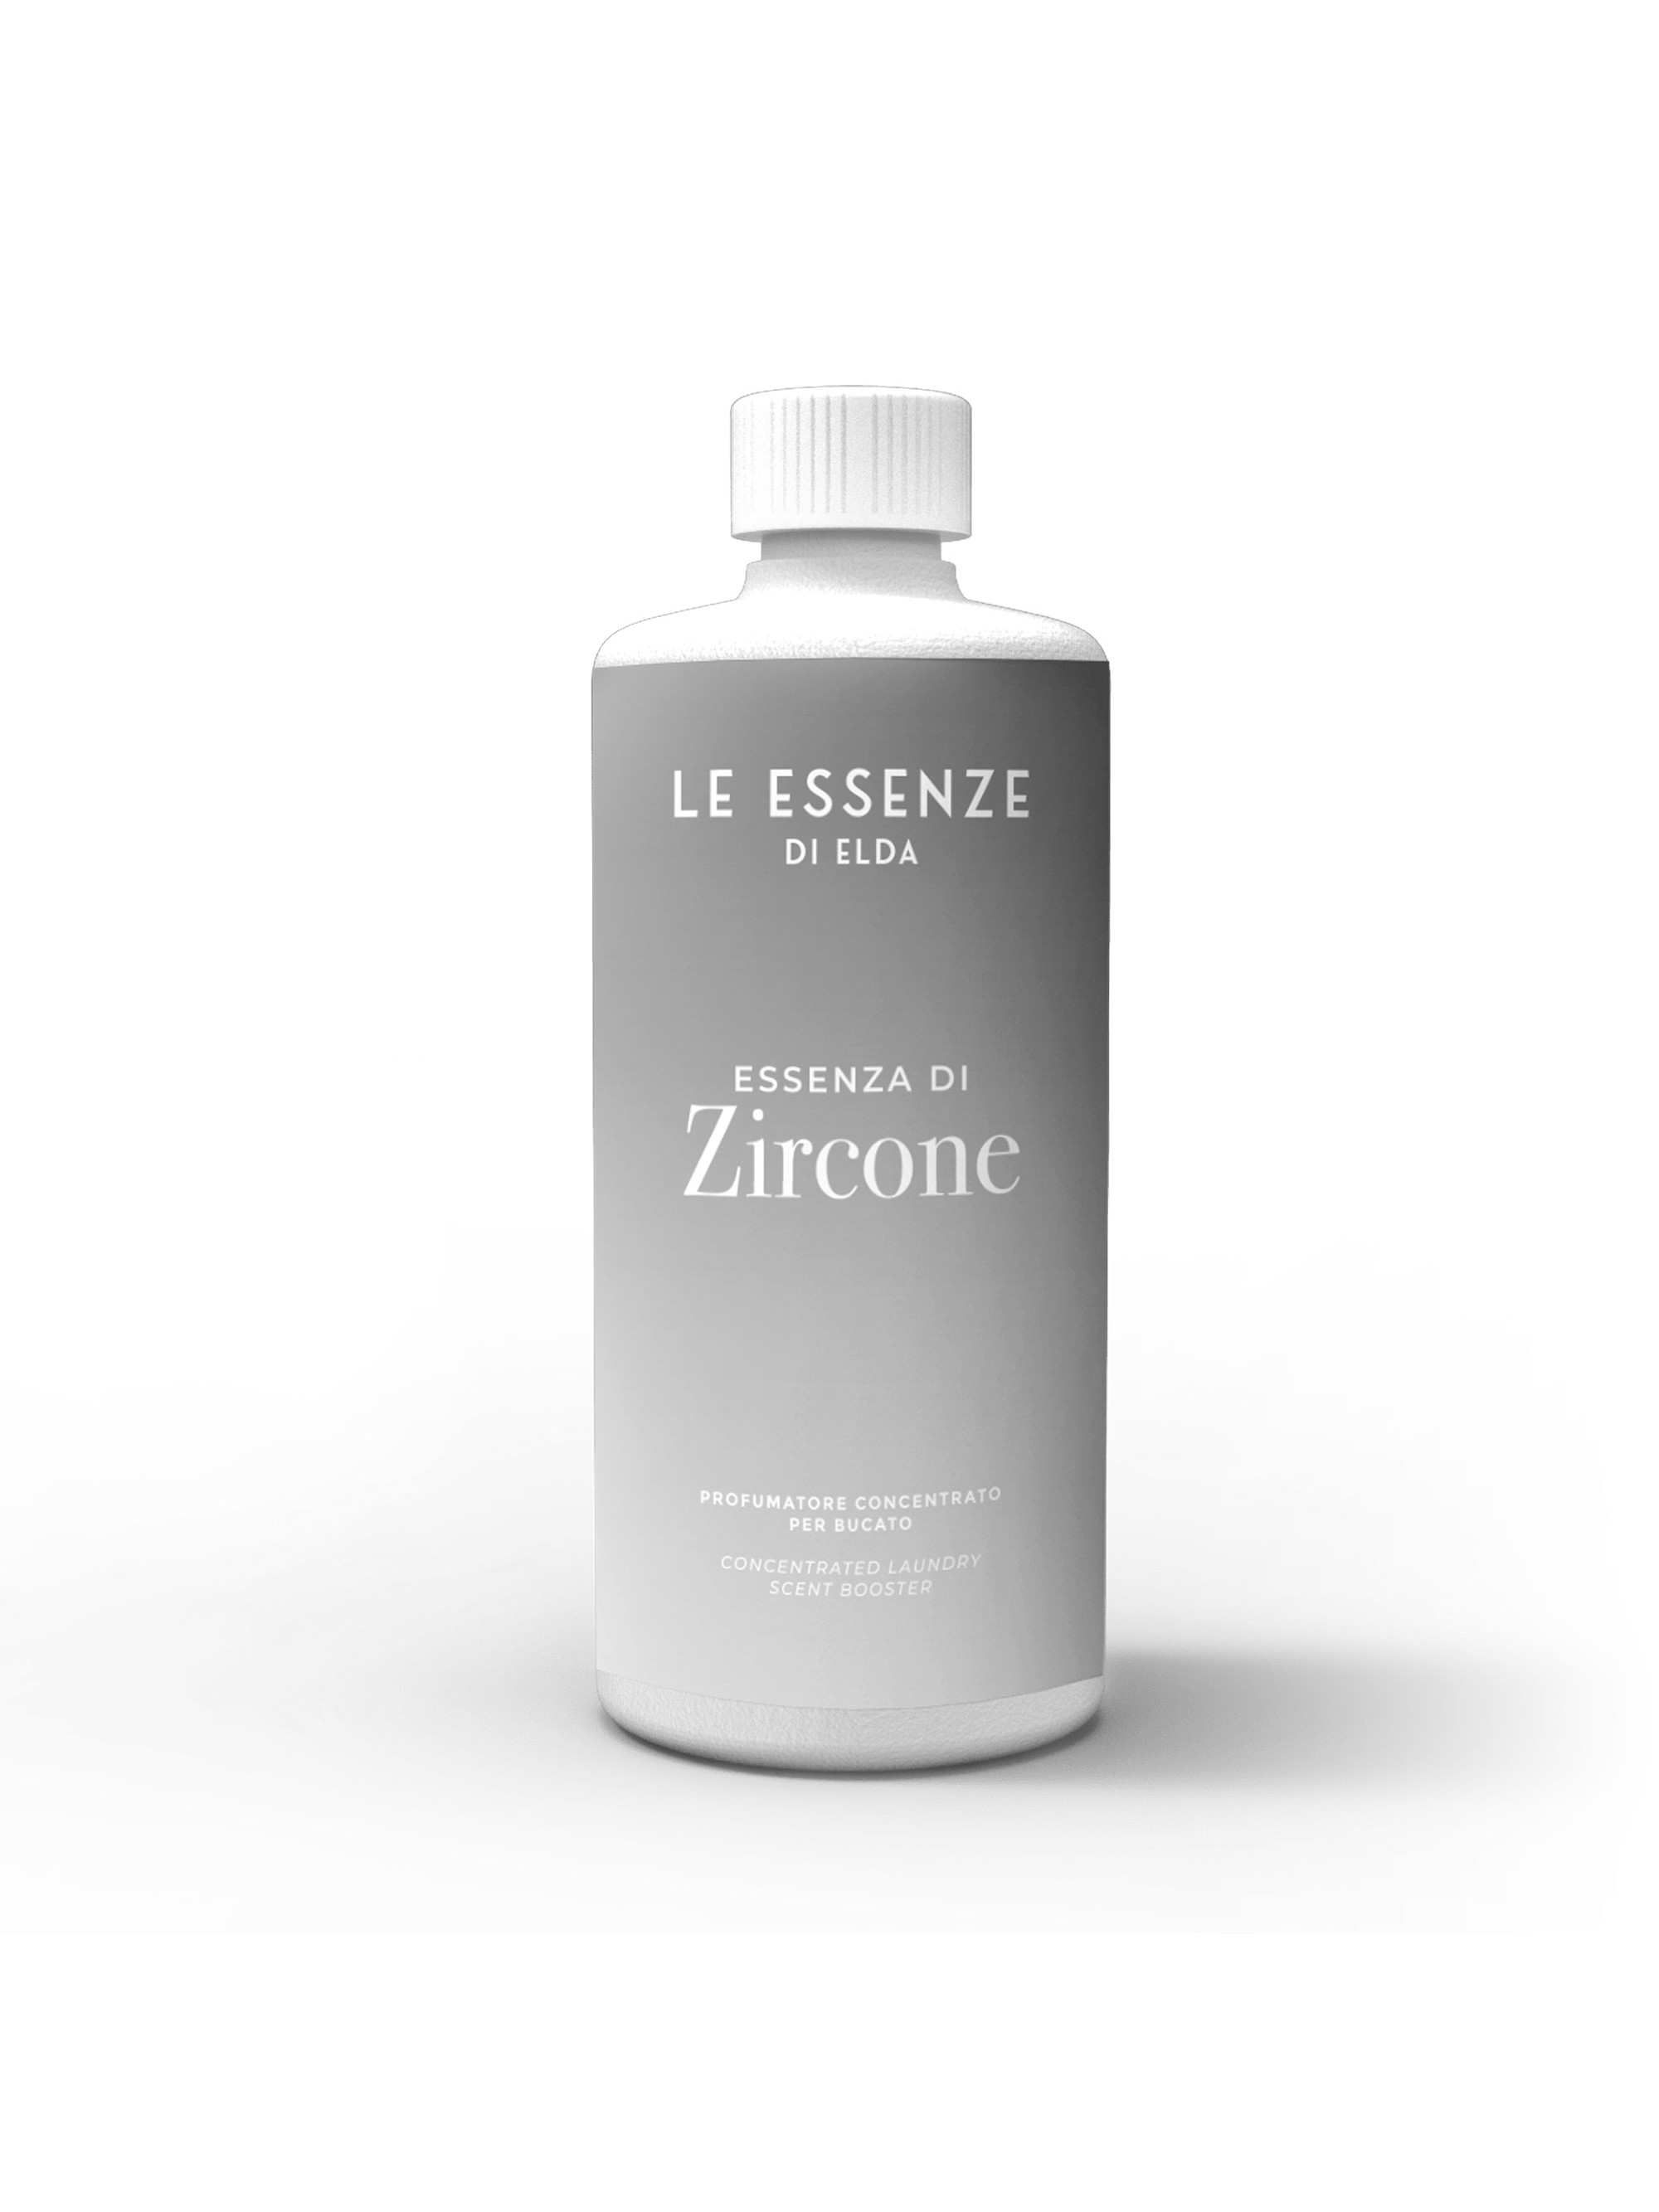 Essenza Zircone - 500 ml laundry perfumer